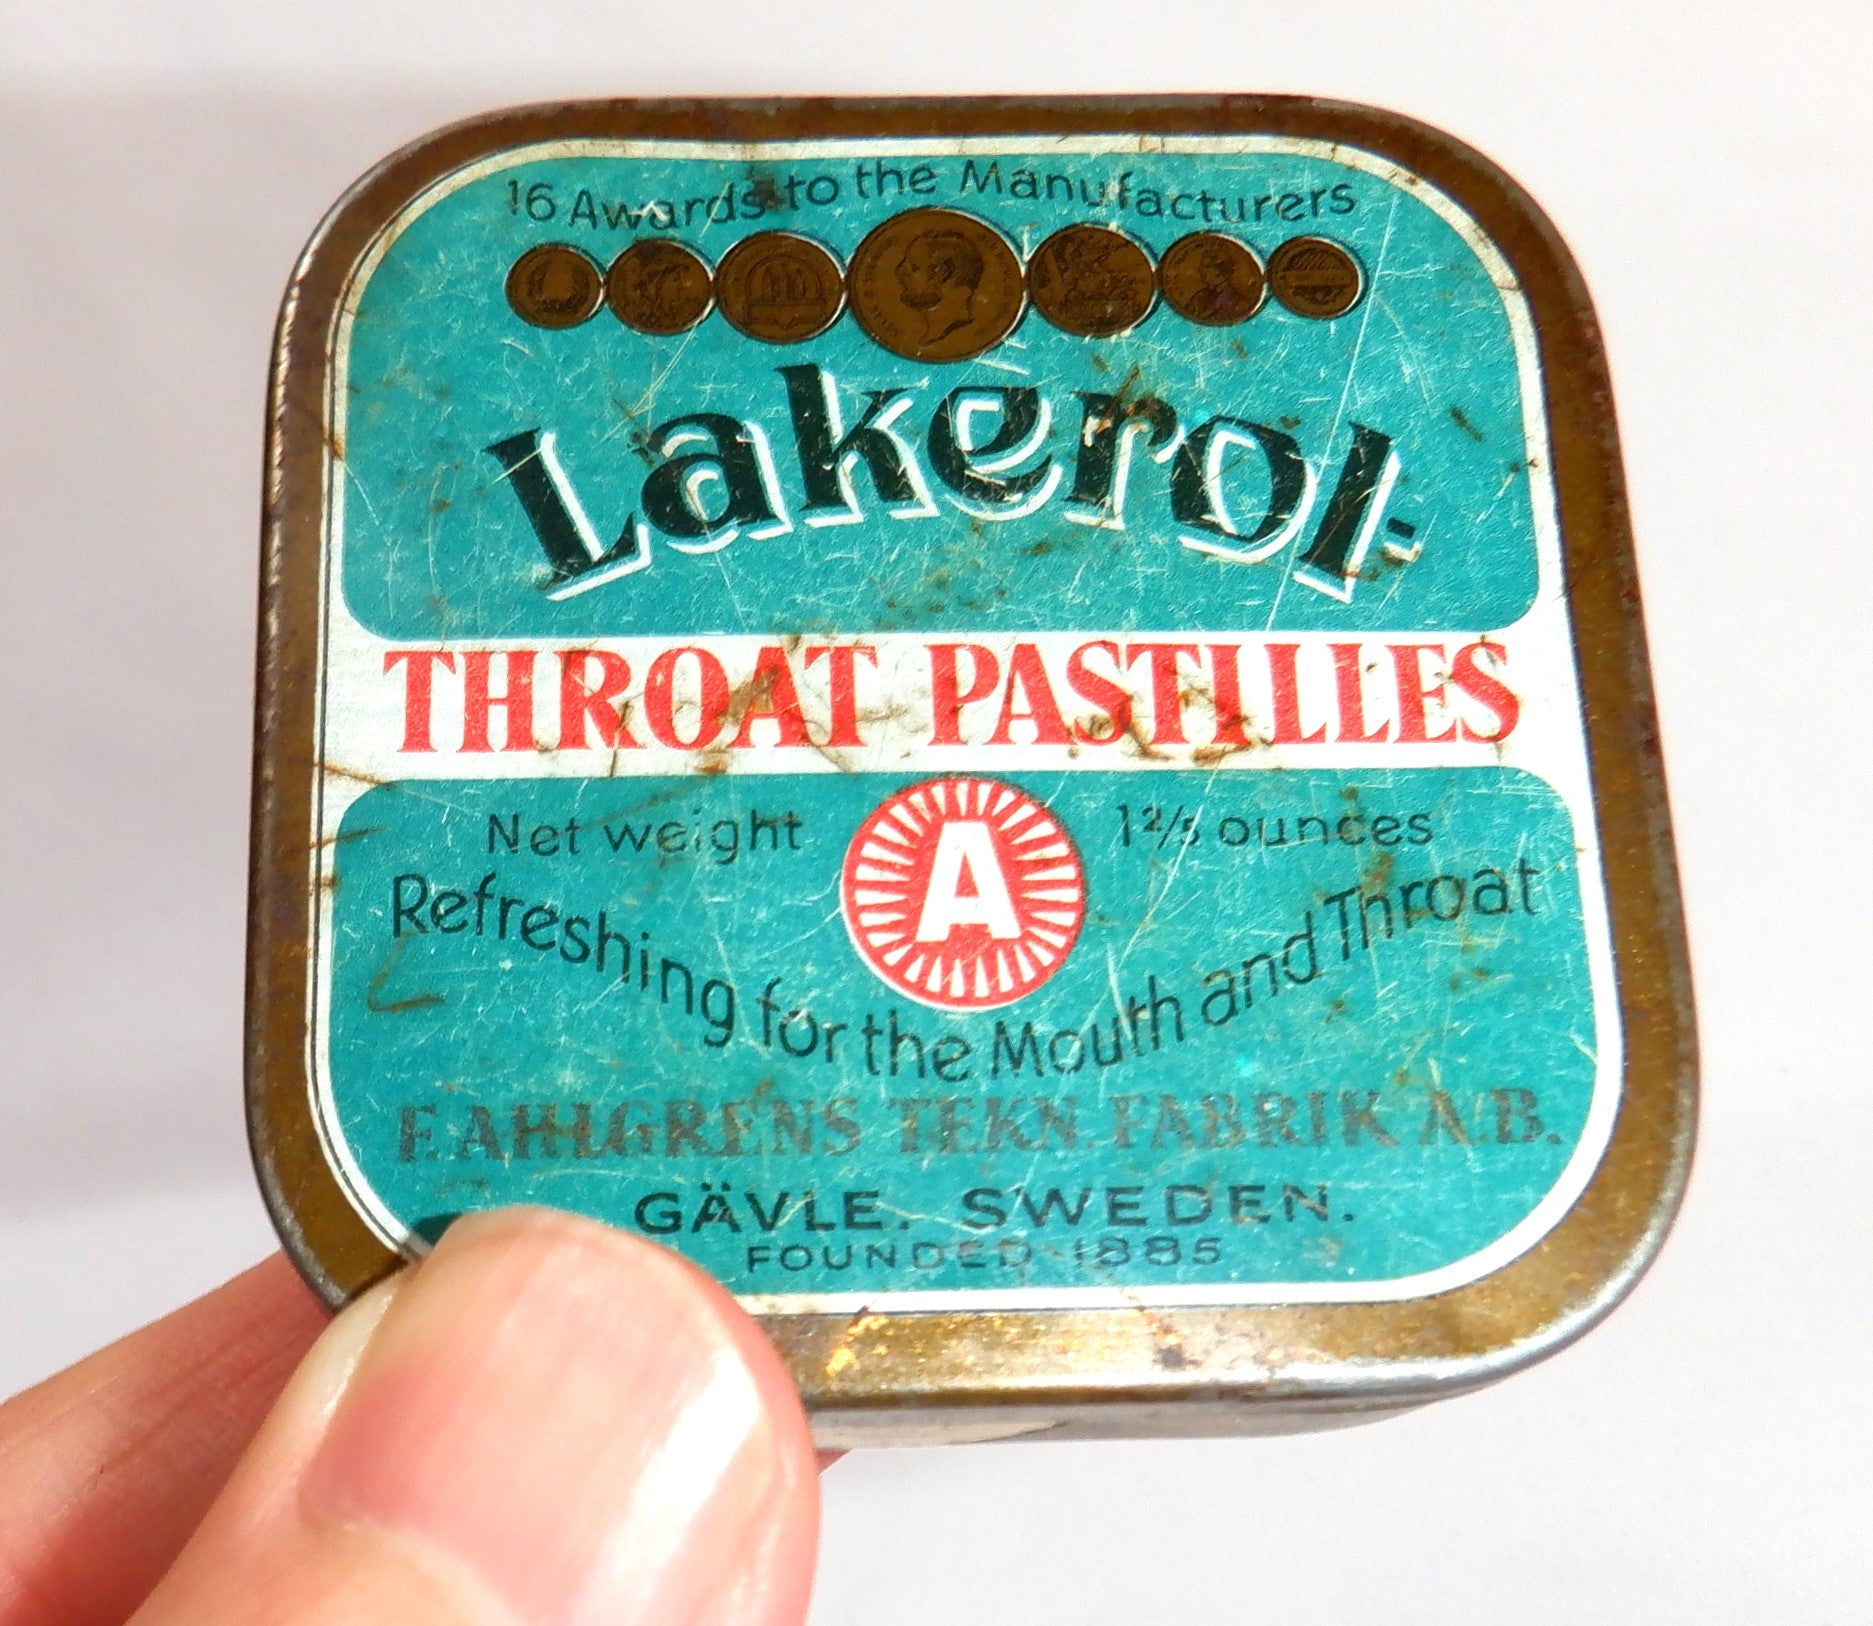 Vintage VALDA Pastilles French Lemon Candy in Tin Litho Box